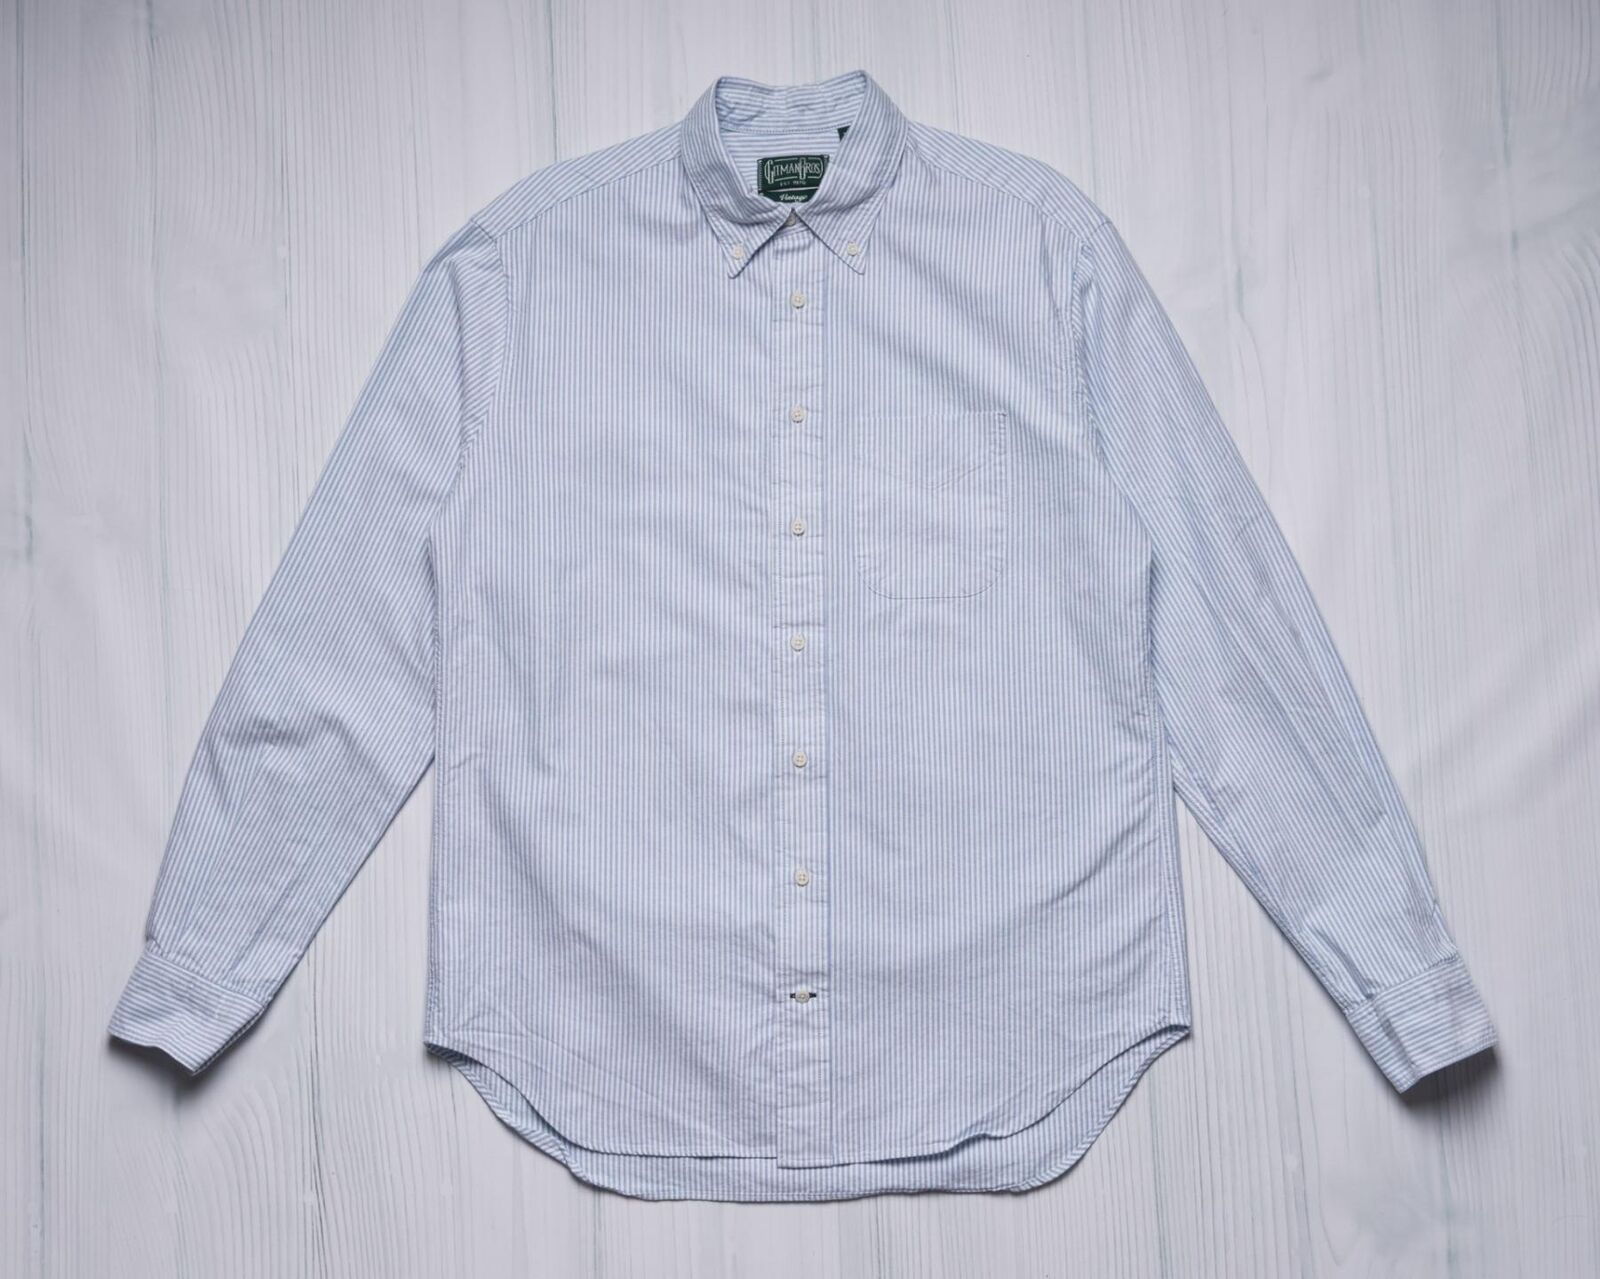 Gitman Vintage $205 Blue White Striped Oxford Button Down Collar Cotton Shirt S